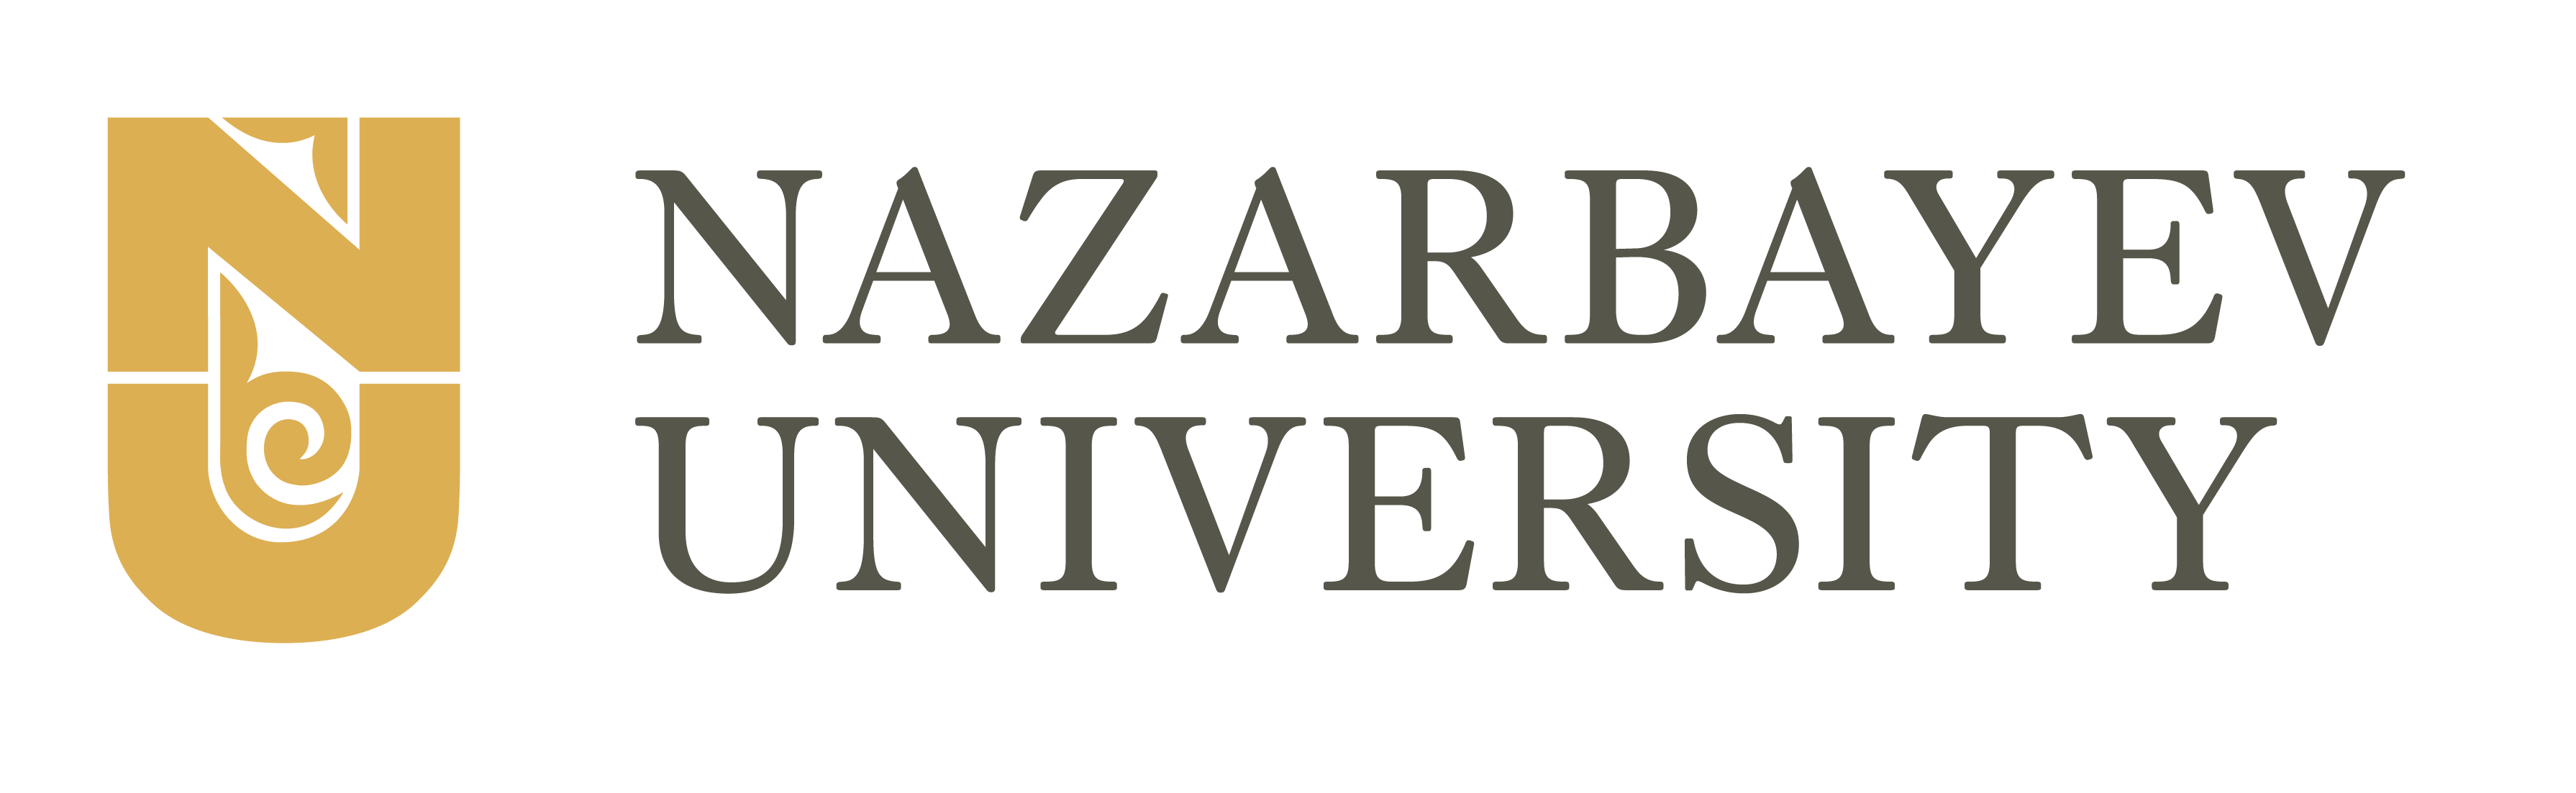 Careers at Nazarbayev University